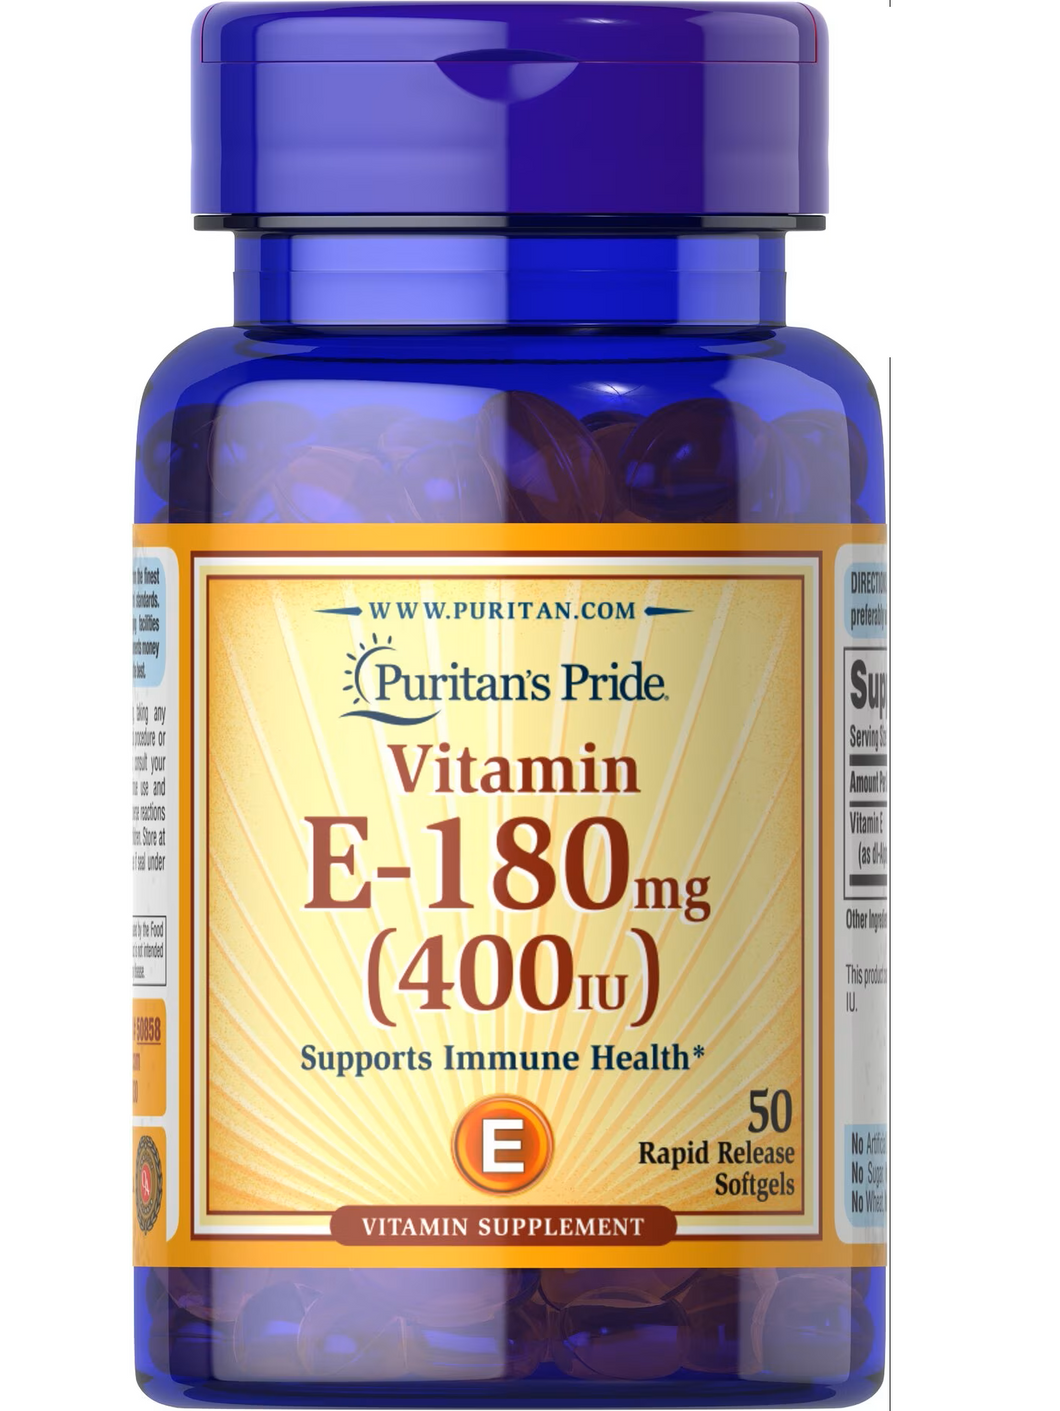 Vitamina E, 180 mg (400 IU), Puritan’s Pride, 50 cápsulas